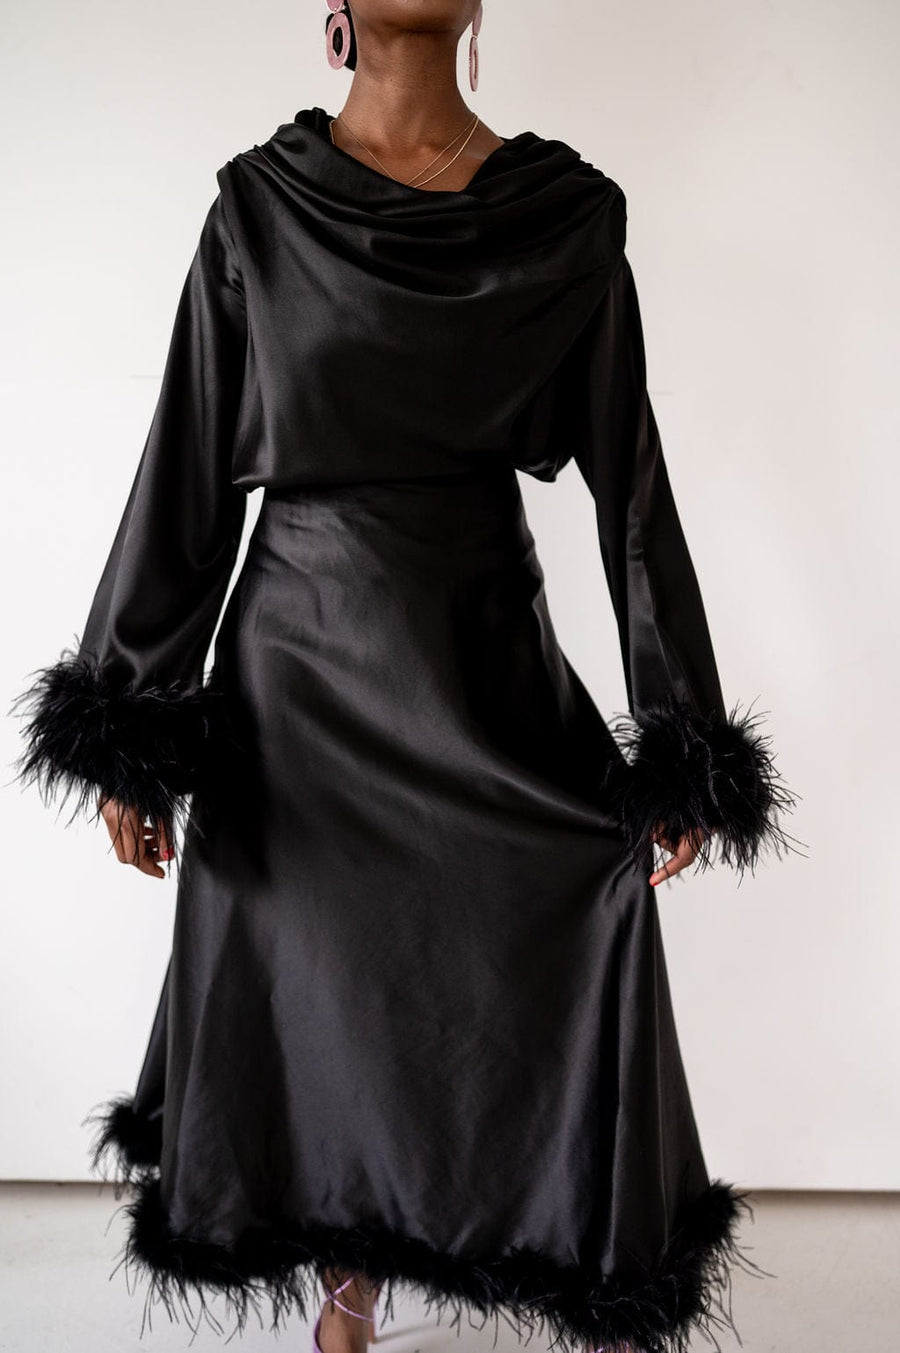 Zaina Feather Hem Maxi Skirt- Black